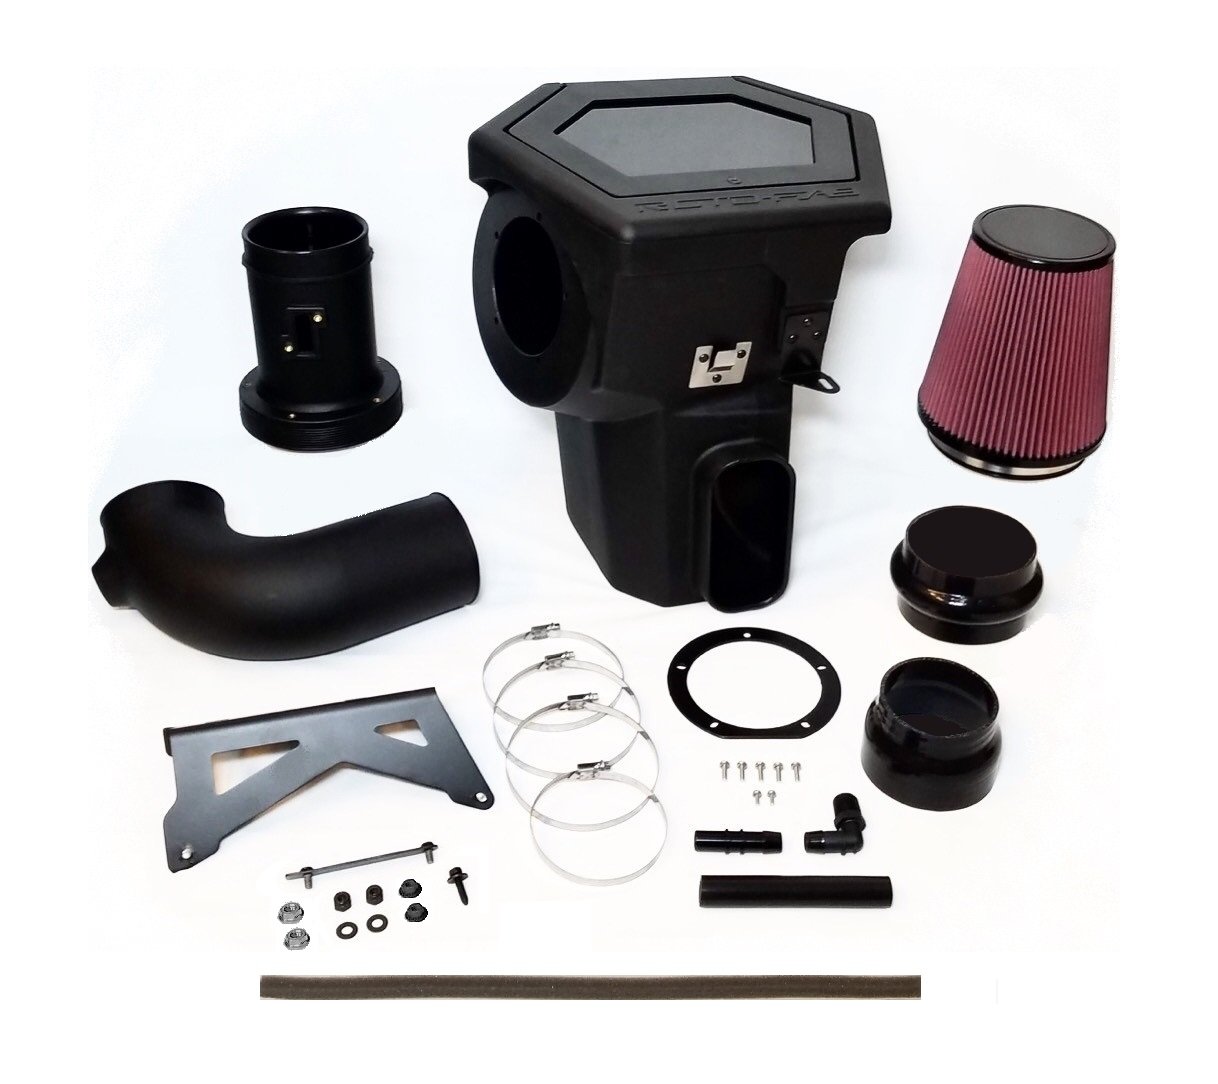 Cold Air Intake Kit Fits Select Chevy Suburban AT4 5.3L, Oiled Air Filter